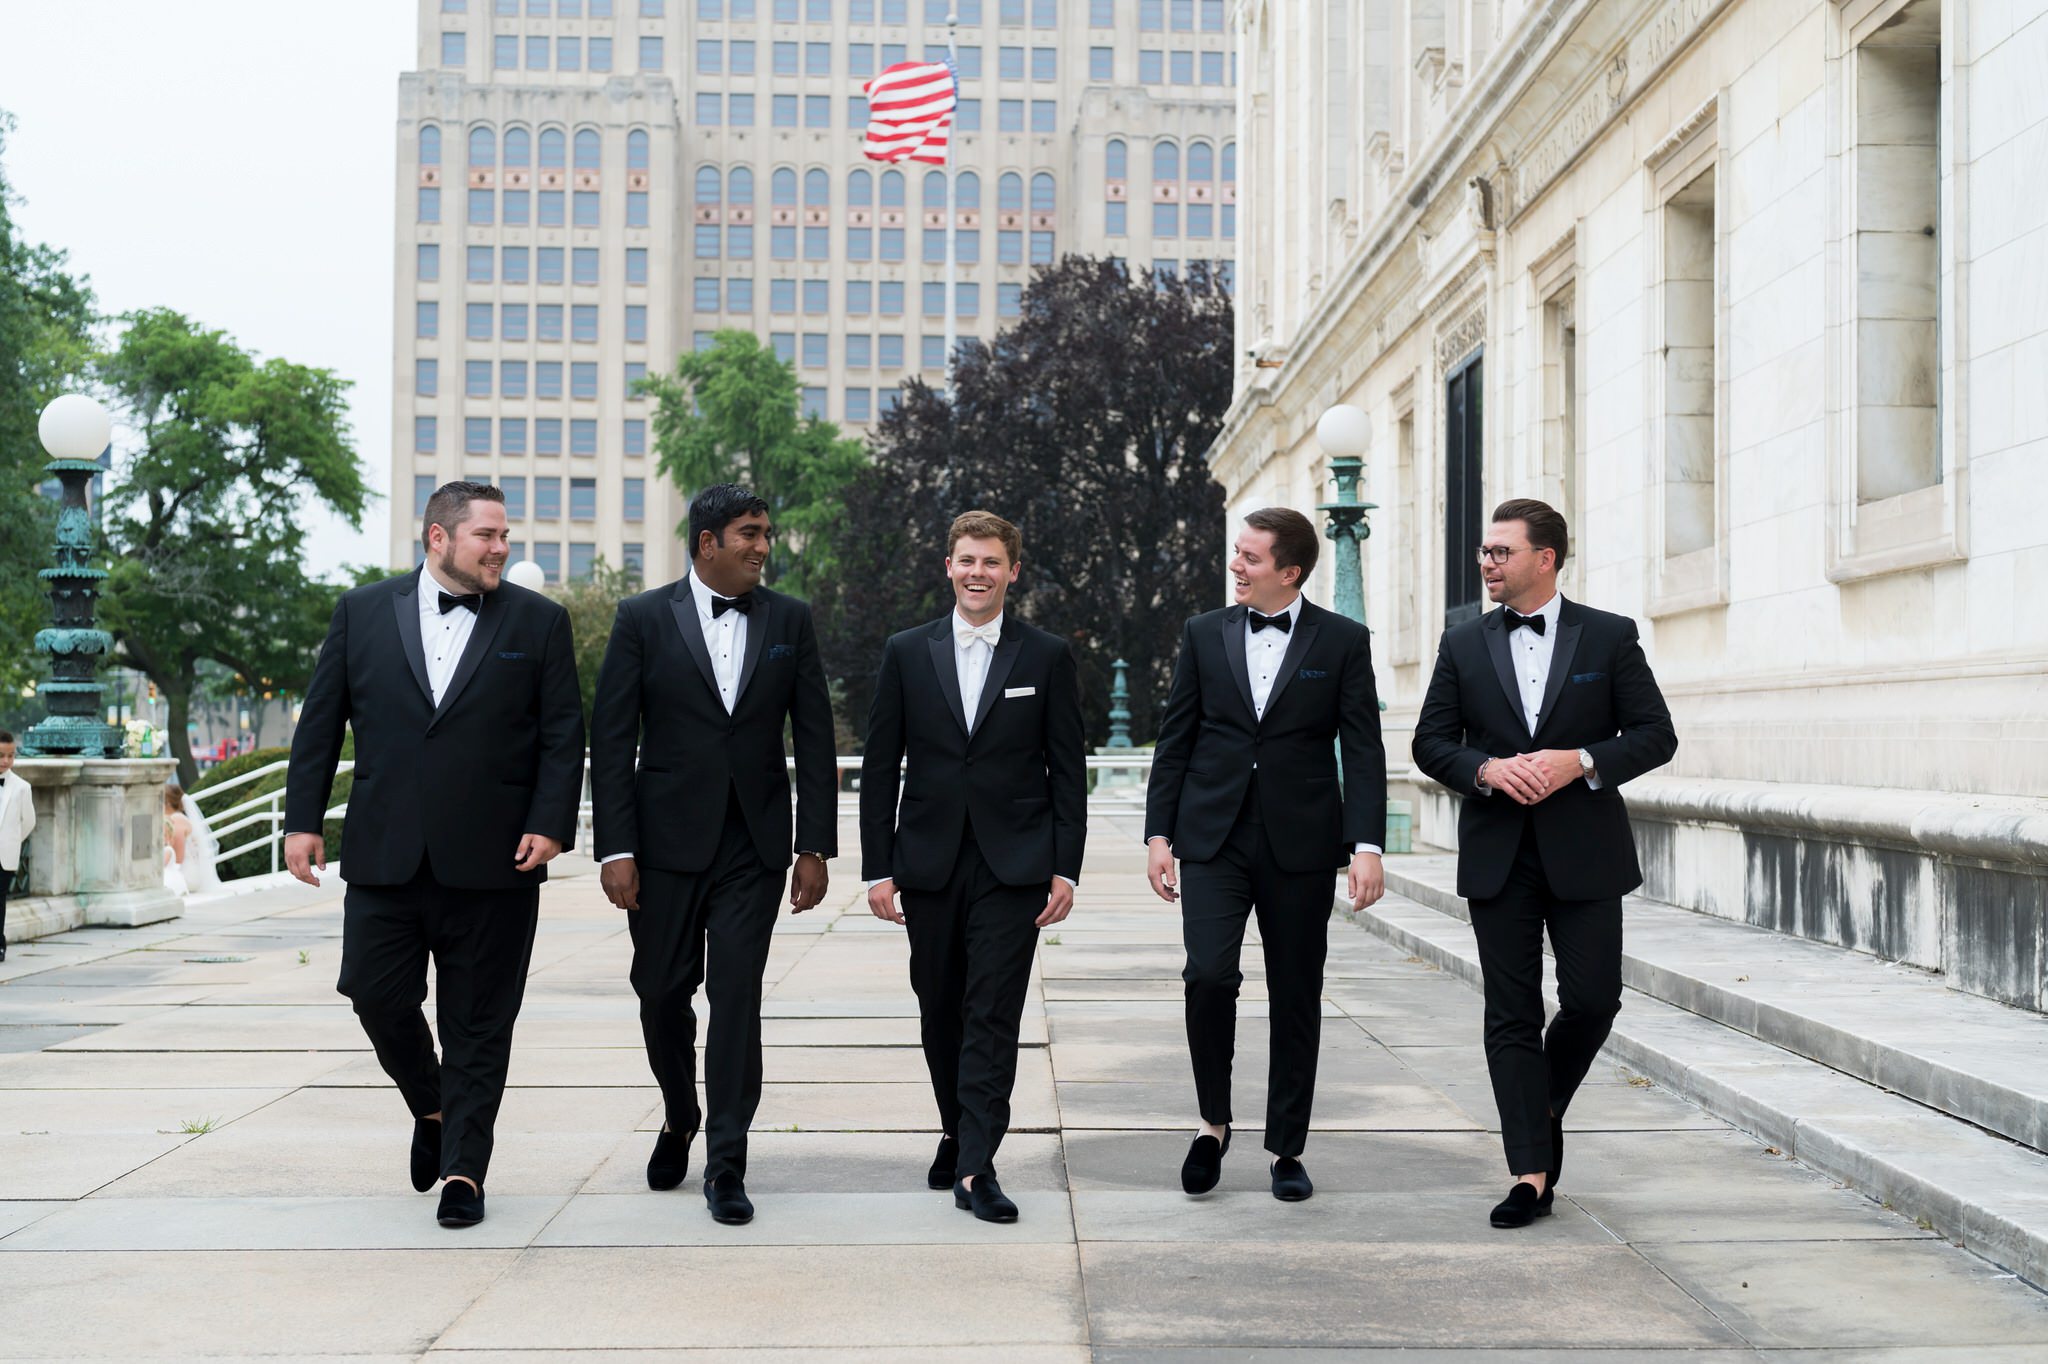 Groomsmen formals at Detroit Public LIbrary